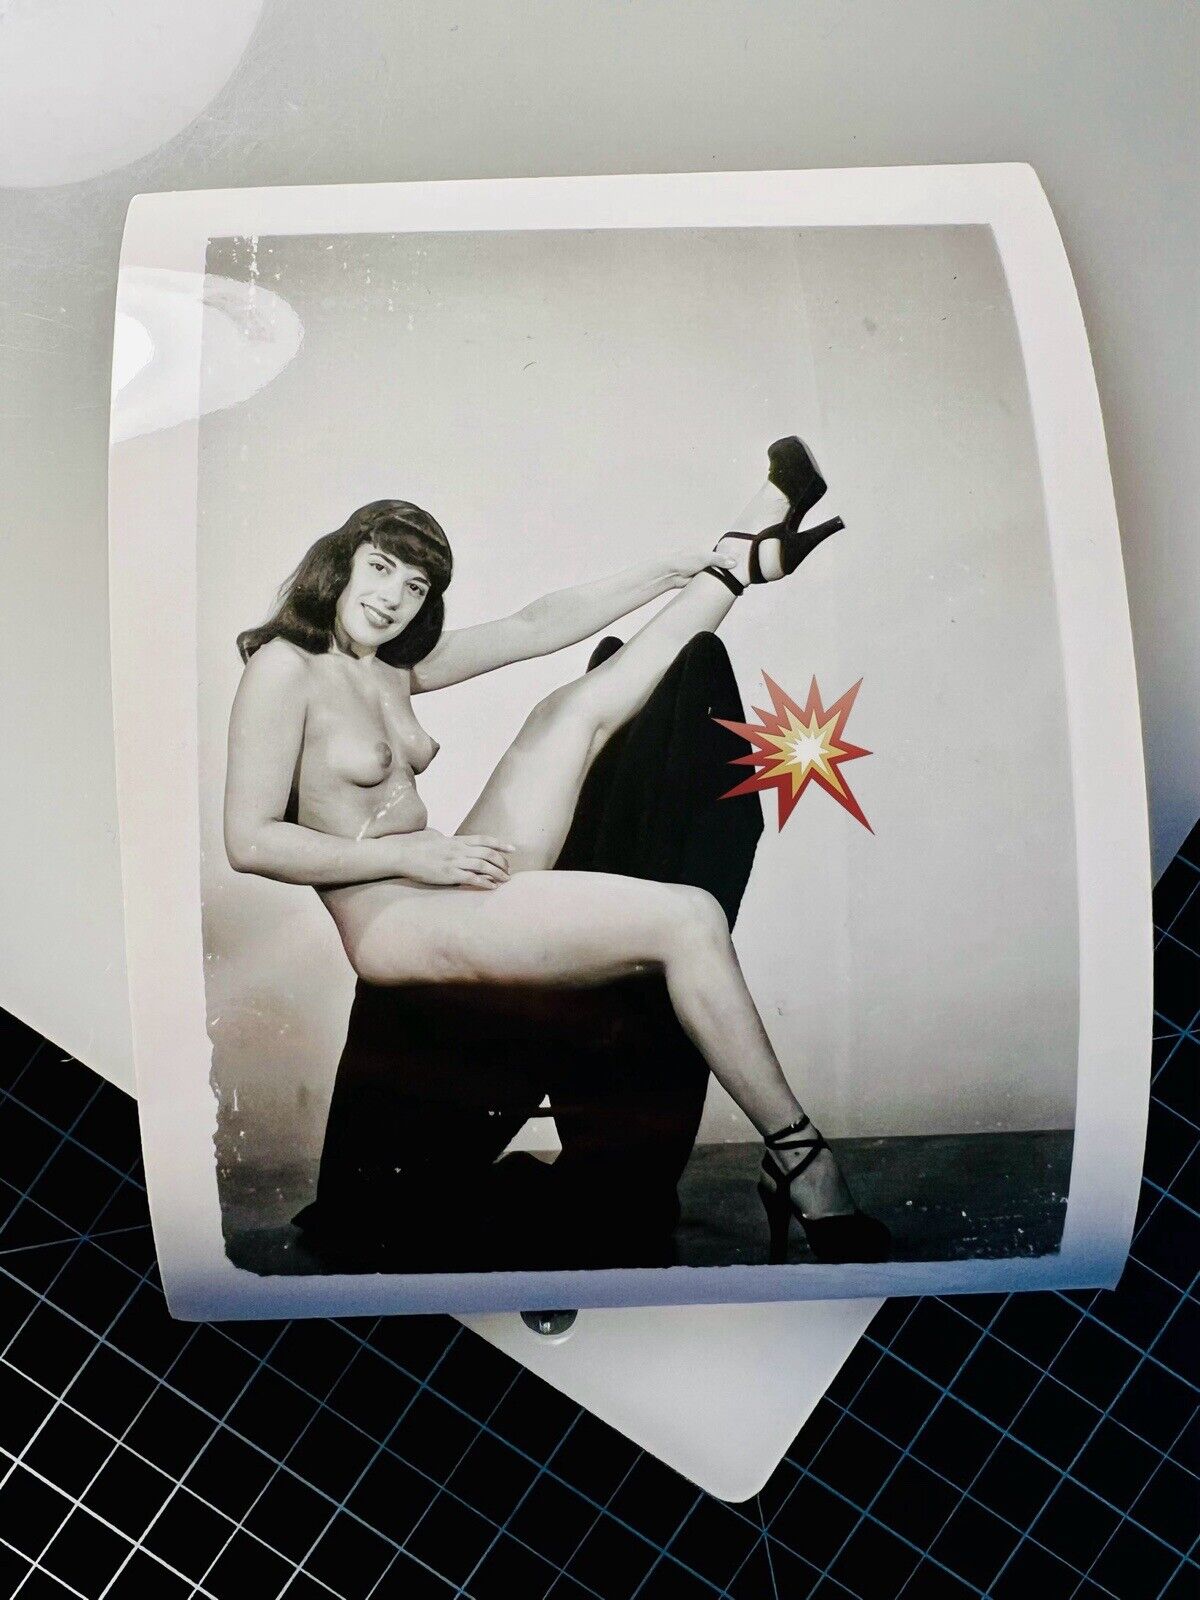 Vintage 50’s Girl Heels Bosom PIN UP Risque Nude Original B&W Girlie Photo #15